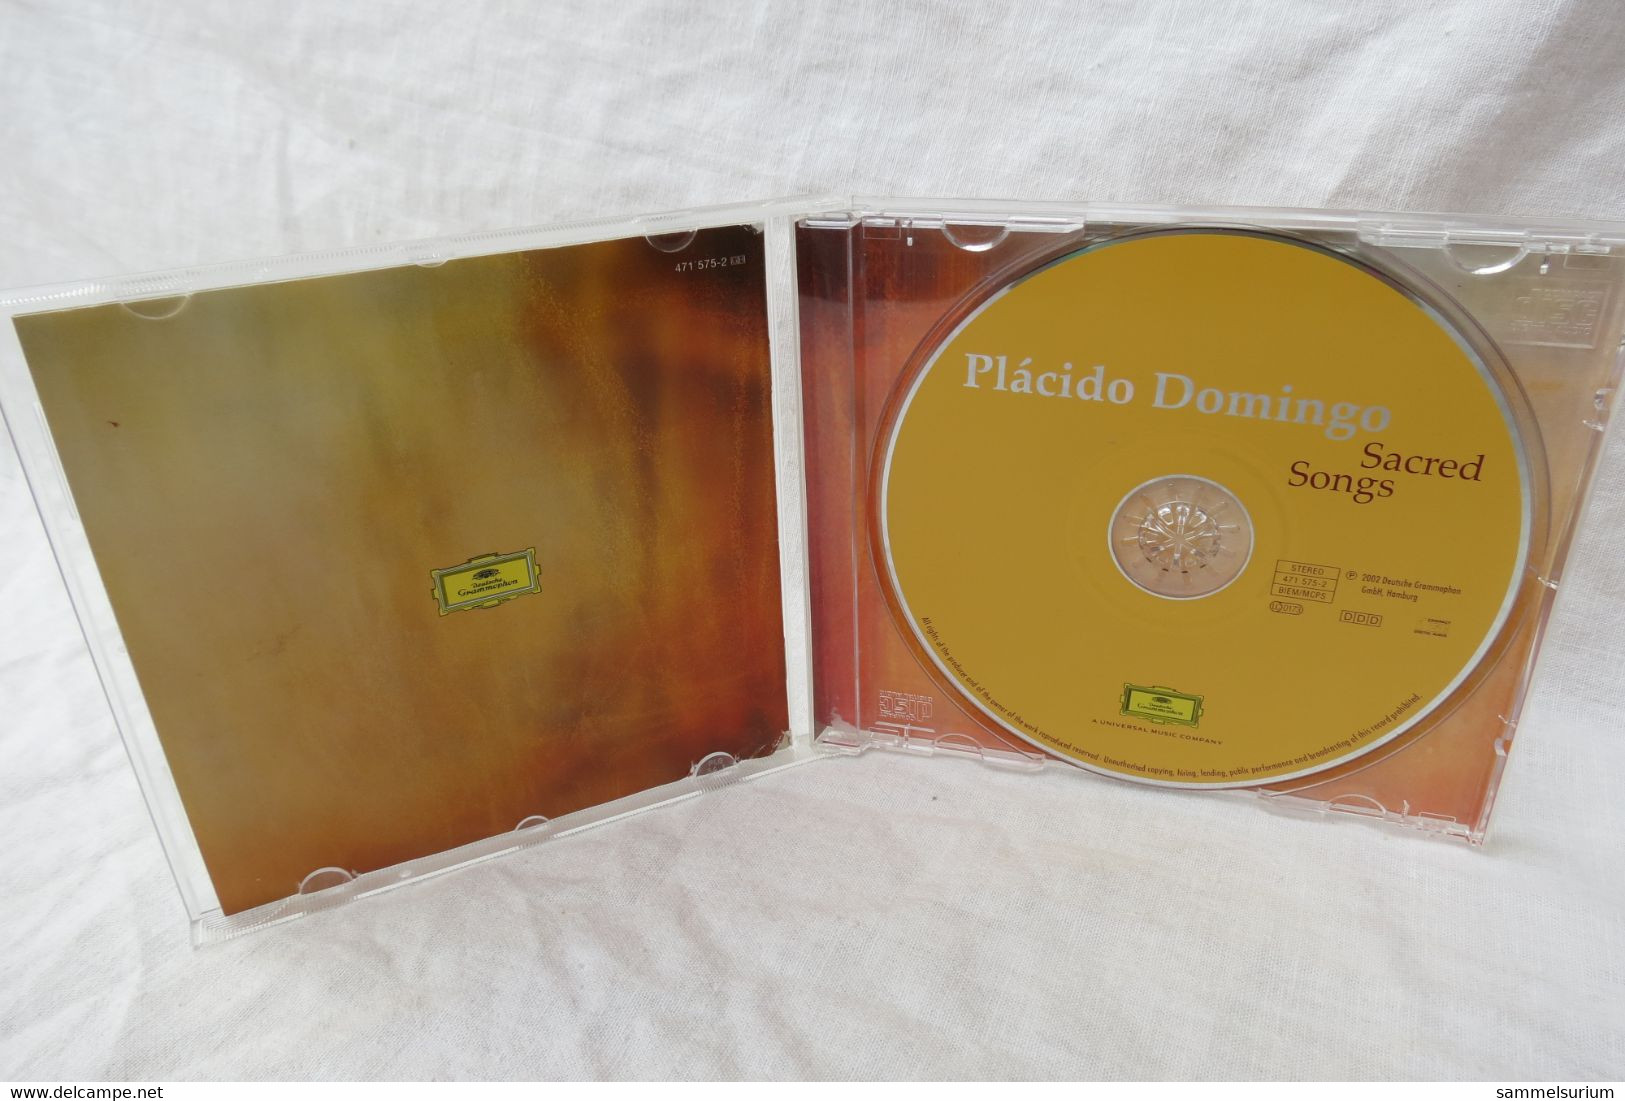 CD "Plácido Domingo" Sacred Songs, Deutsche Grammophon - Opera